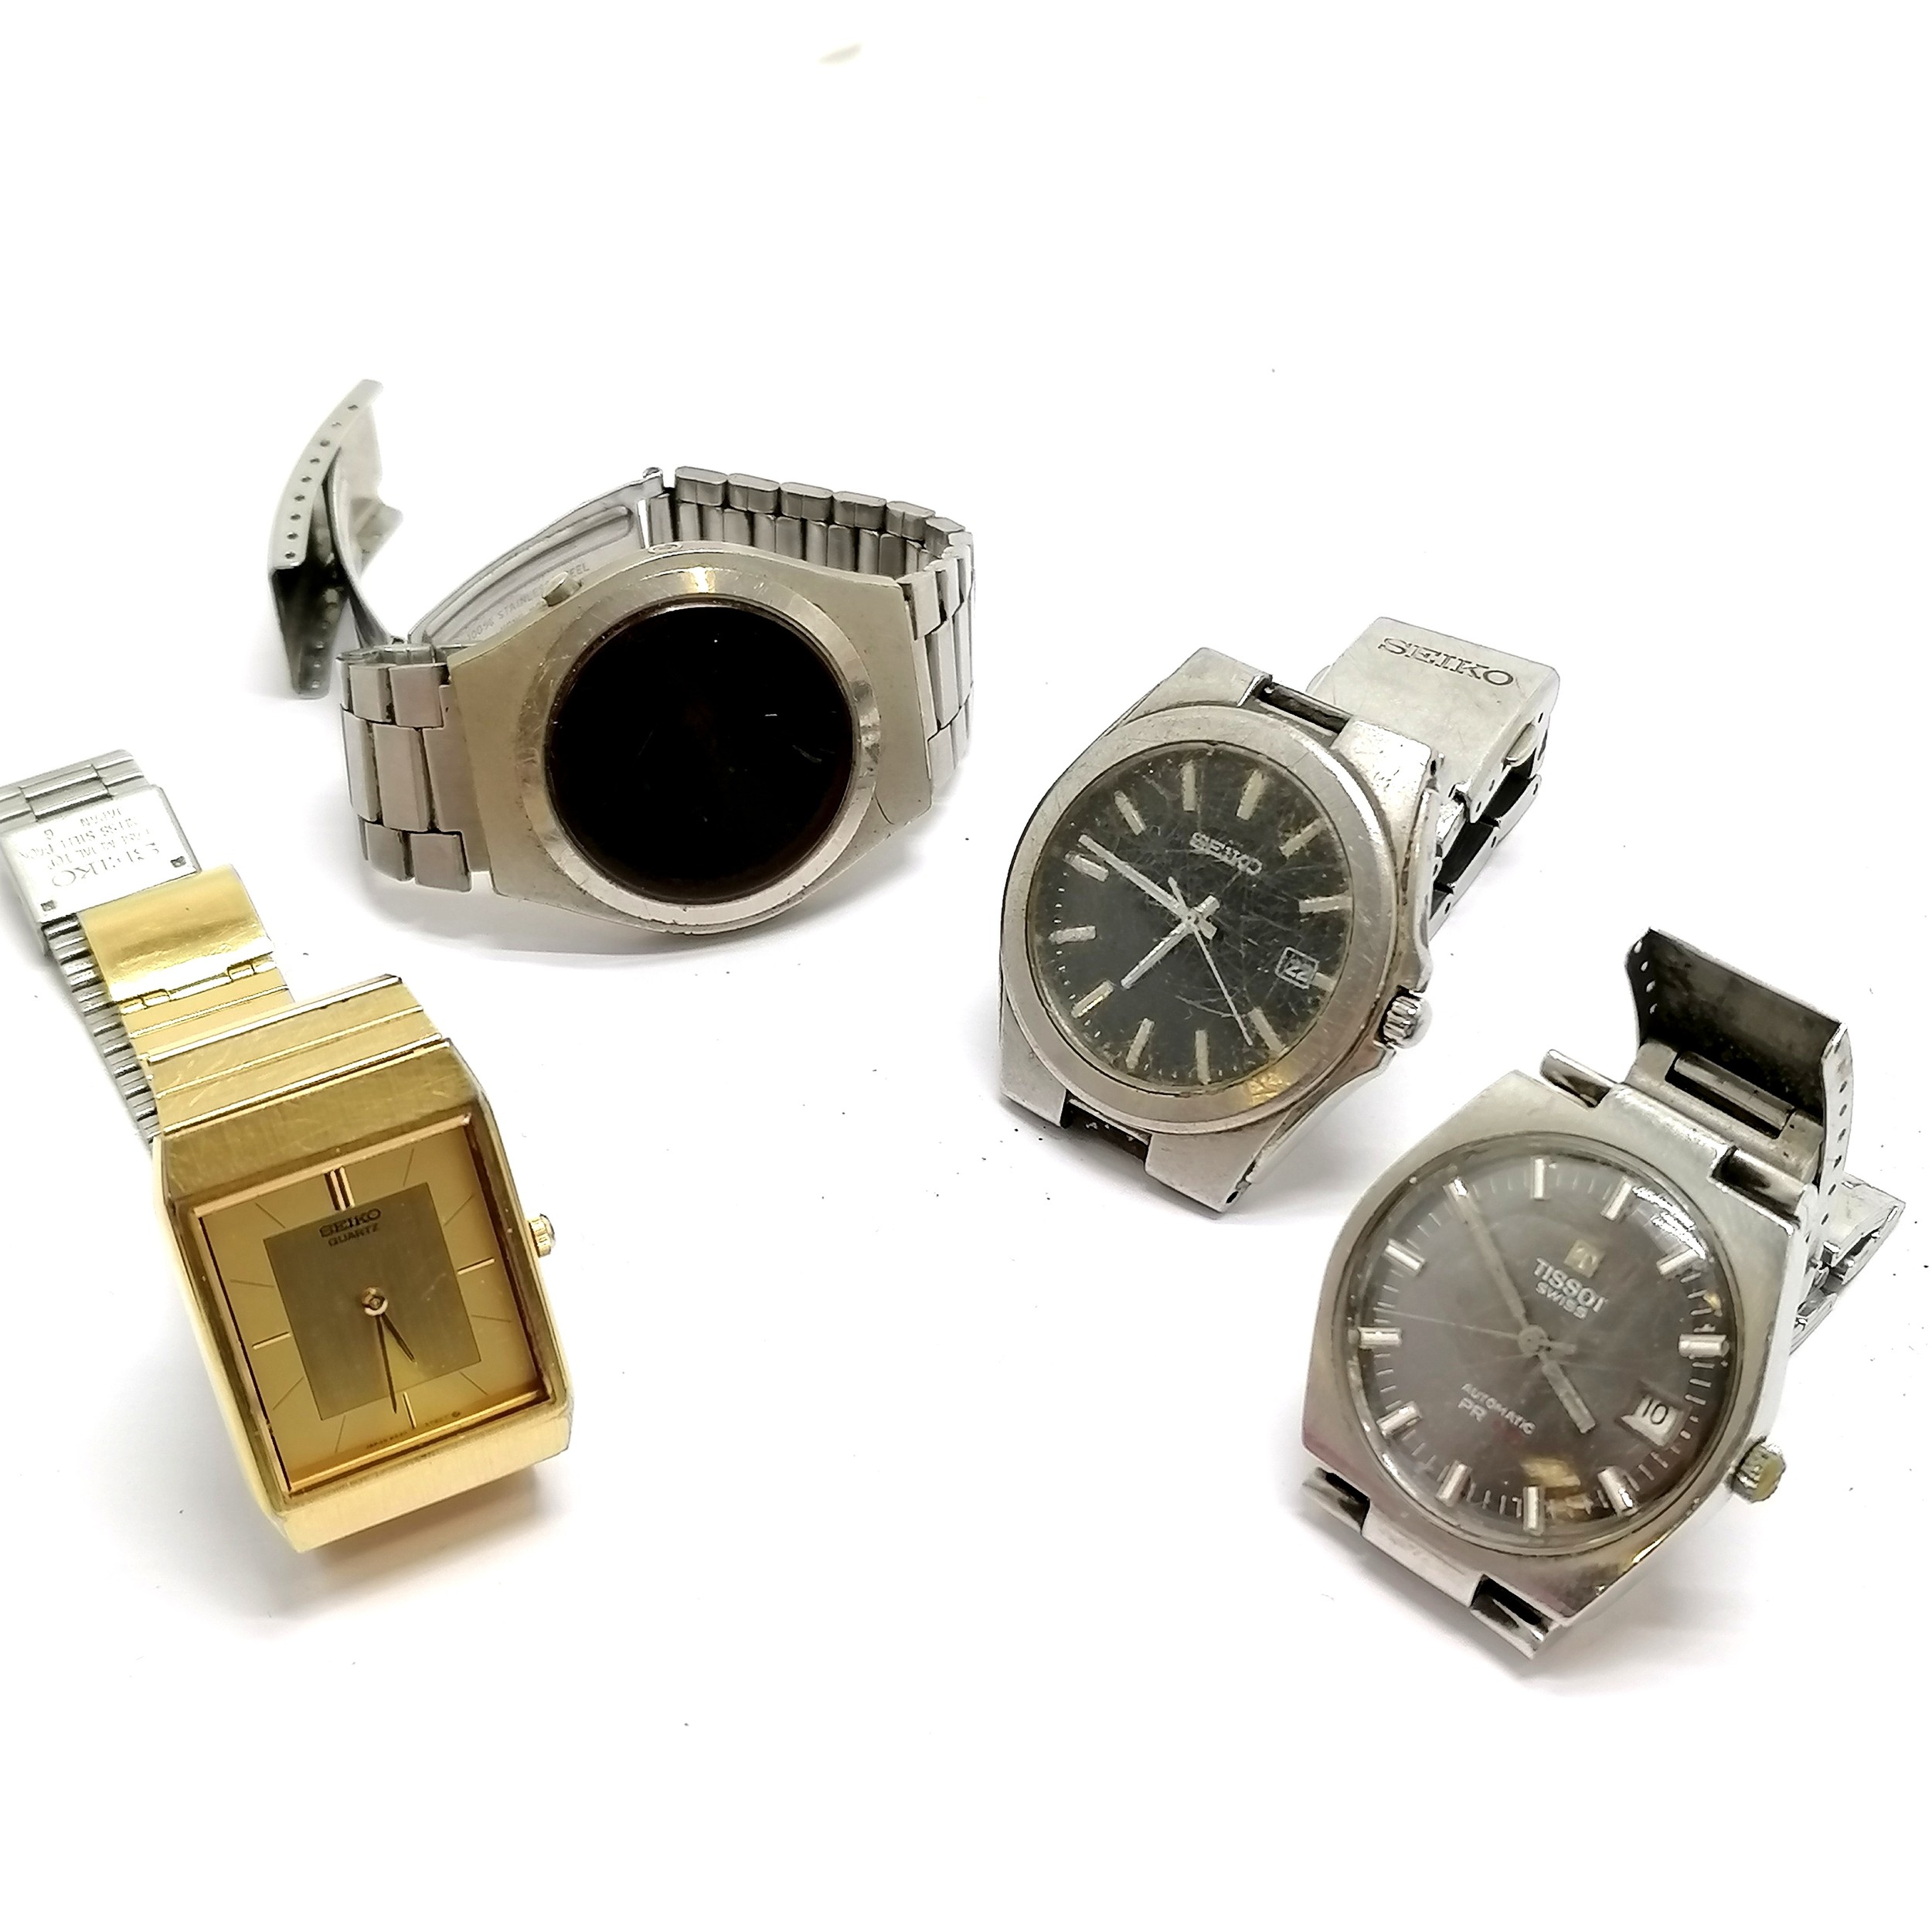 4 x vintage wristwatches - Tissot automatic PR516, 2 x Seiko, Beta - for spares / repairs - SOLD